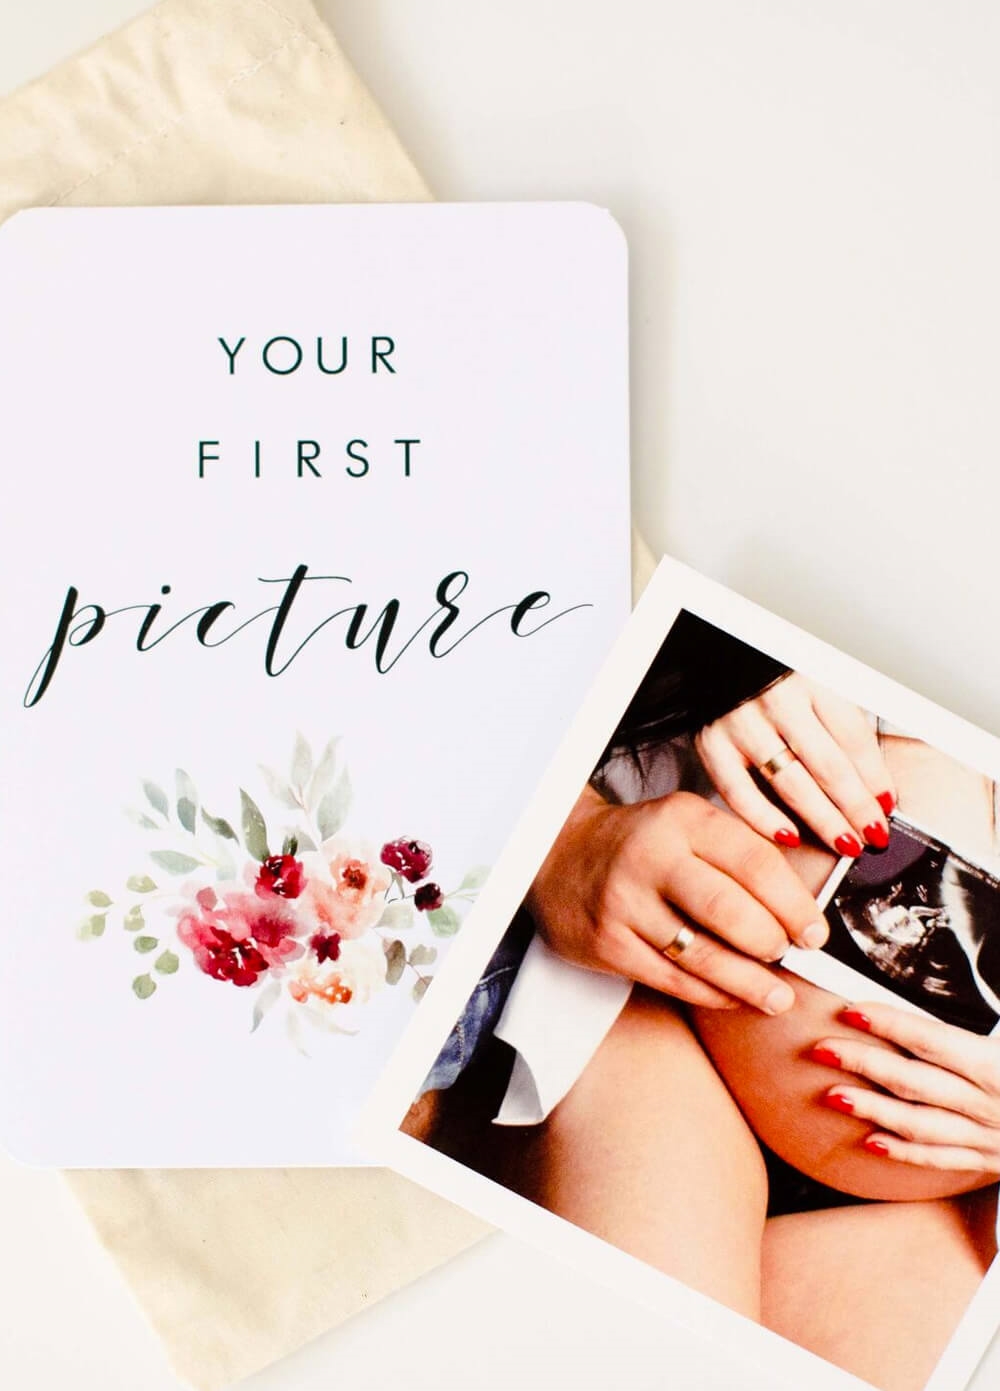 Pregnancy Milestone Cards in Fleur by Blossom & Pear